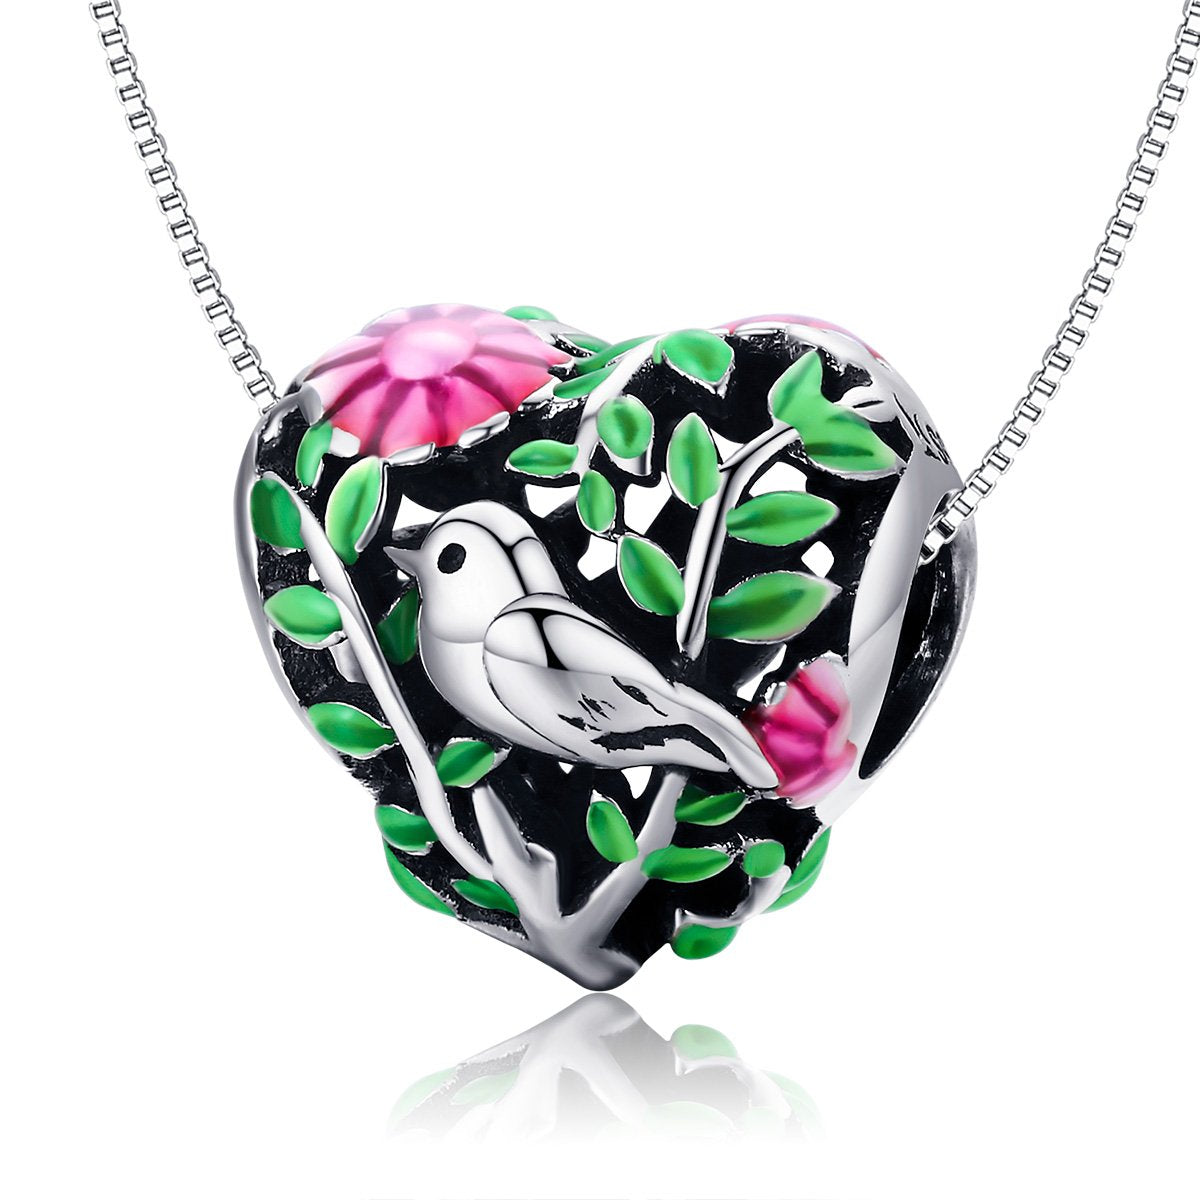 Sterling 925 silver charm the bird n floral pendant fits Pandora charm and European charm bracelet scc646 Xaxe.com